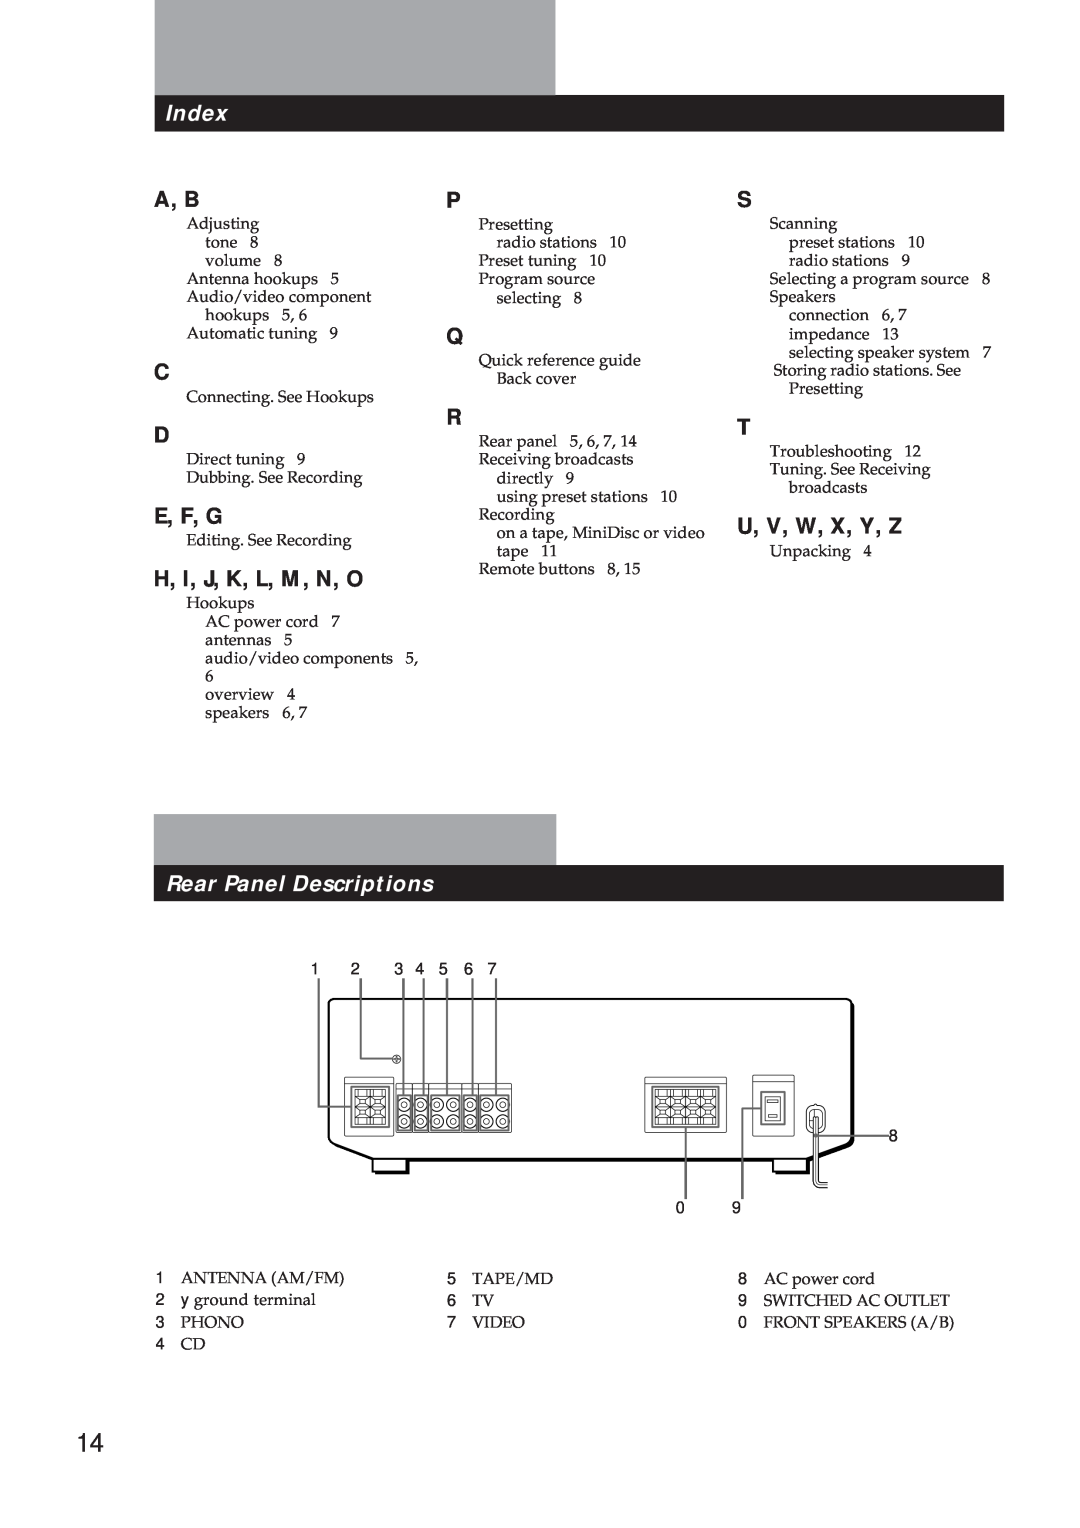 Sony STR-DE310 manual Index, A, B, E, F, G, H, I, J, K, L, M, N, O, Rear Panel Descriptions, U, V, W, X, Y, Z 